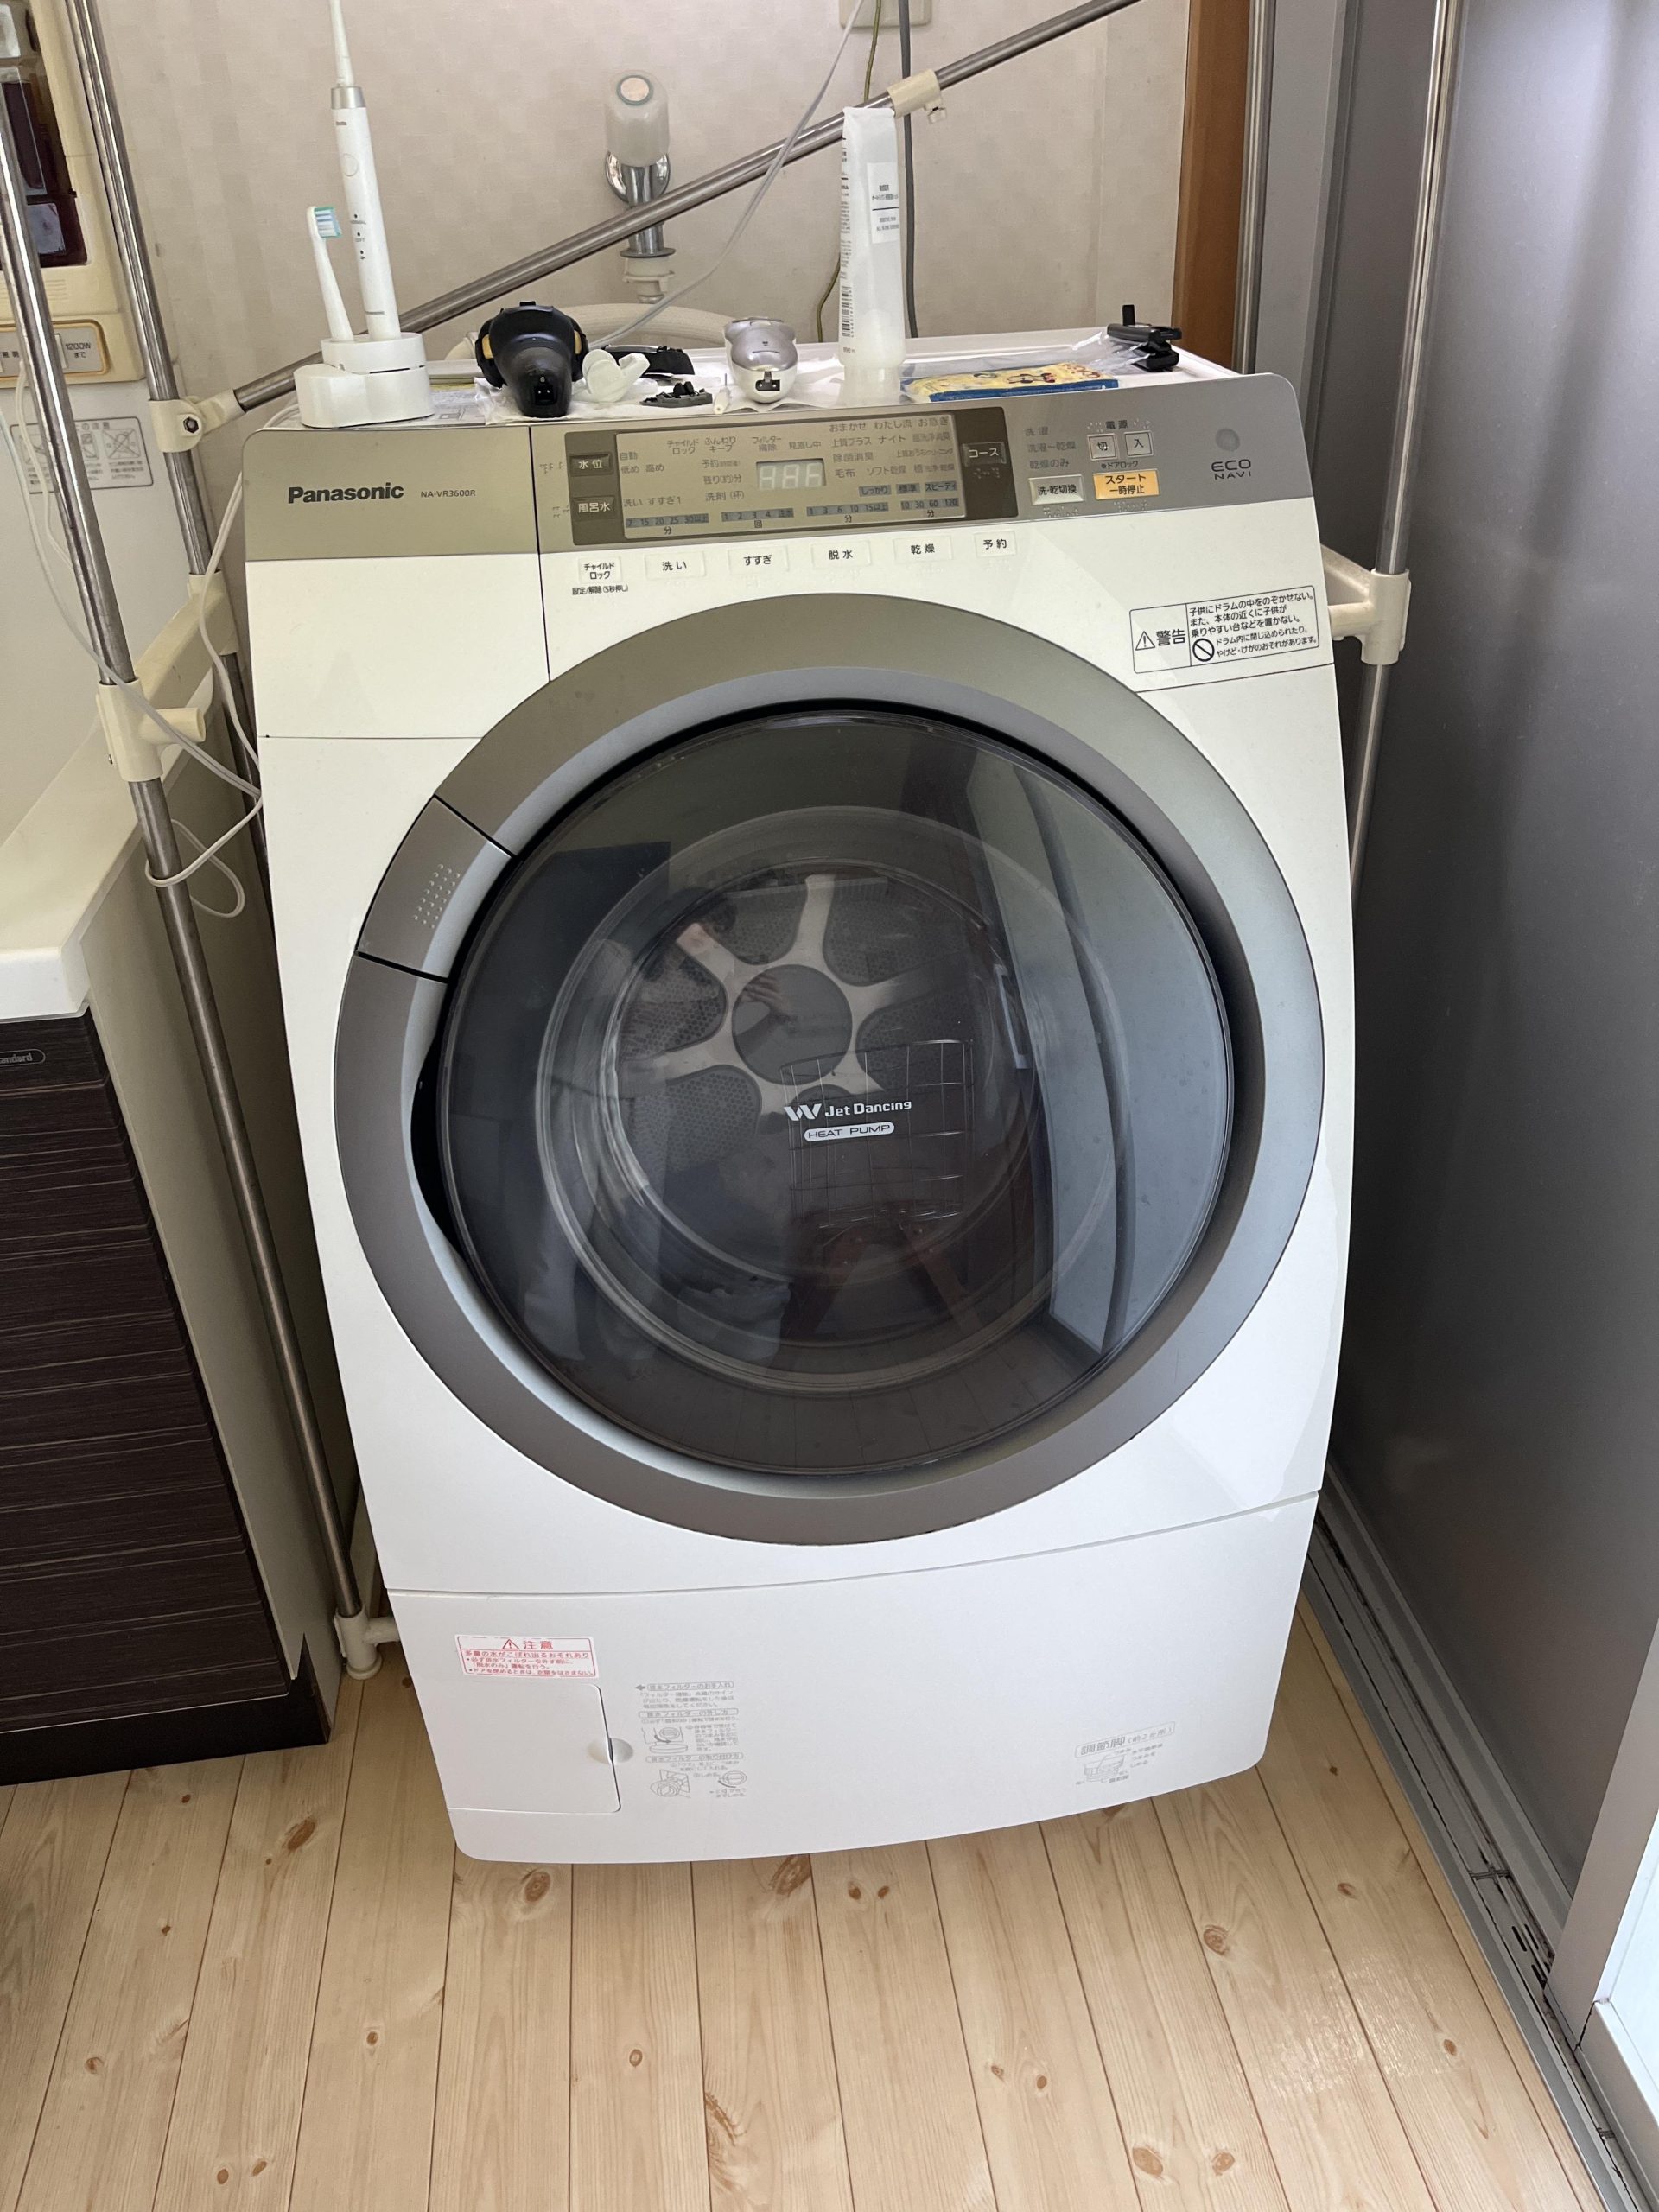 Panasonic ドラム式洗濯乾燥機 NA-VR3600L 分解洗浄済み - 生活家電